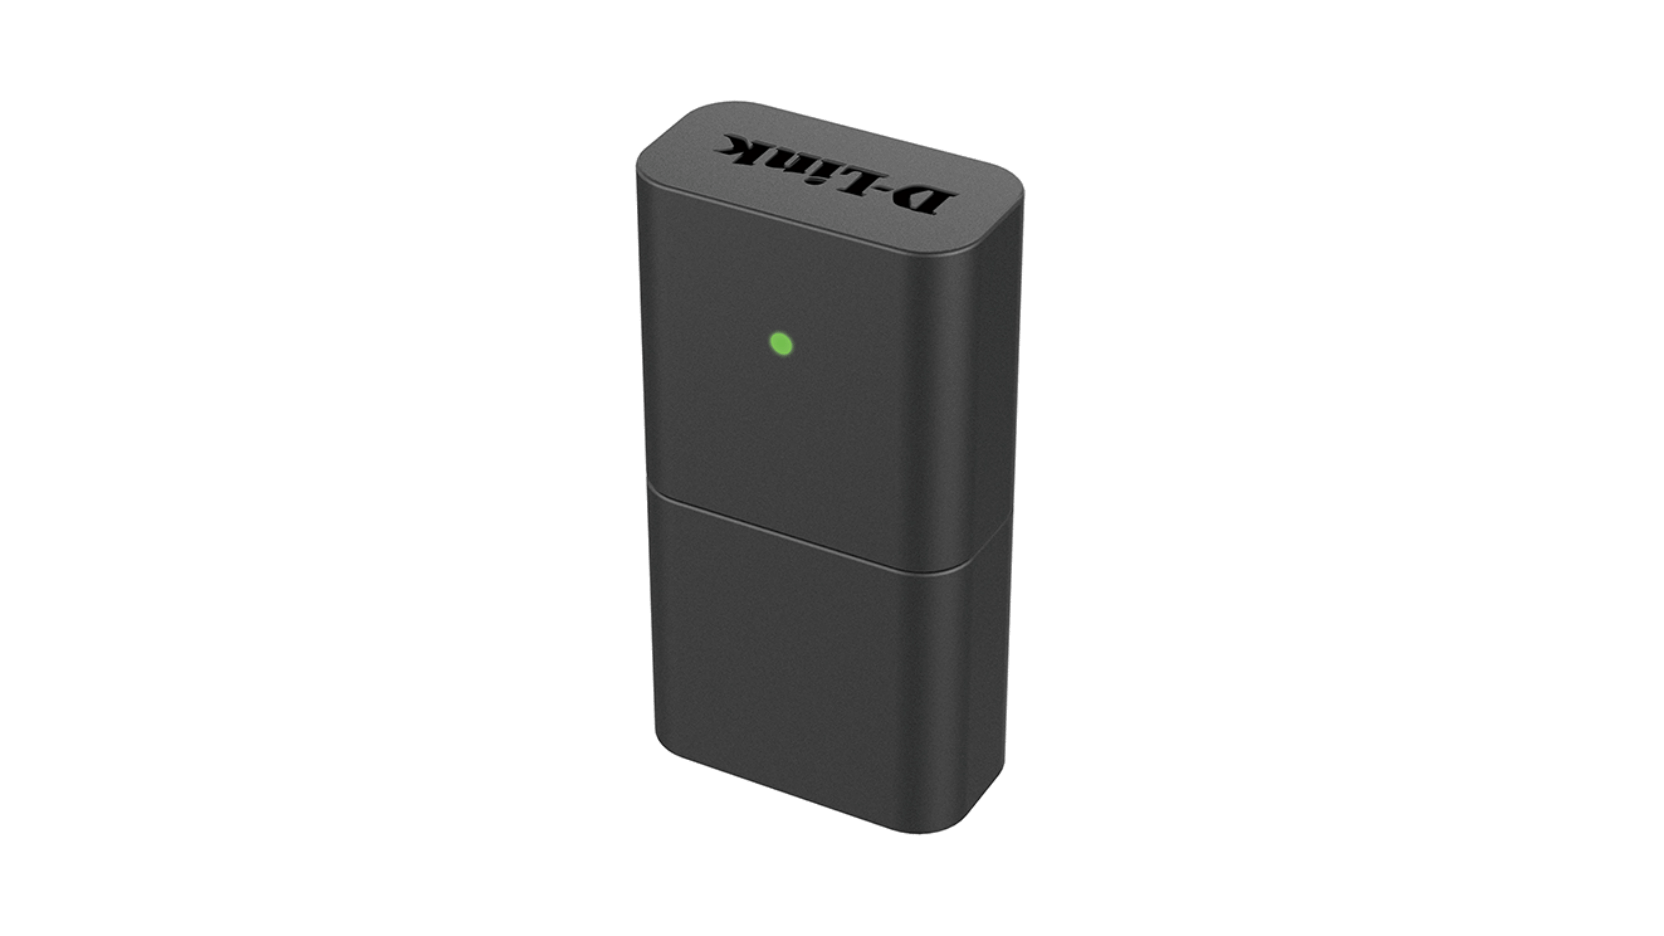 Dwa 131 Wireless N Nano Usb Adapter D Link Uk